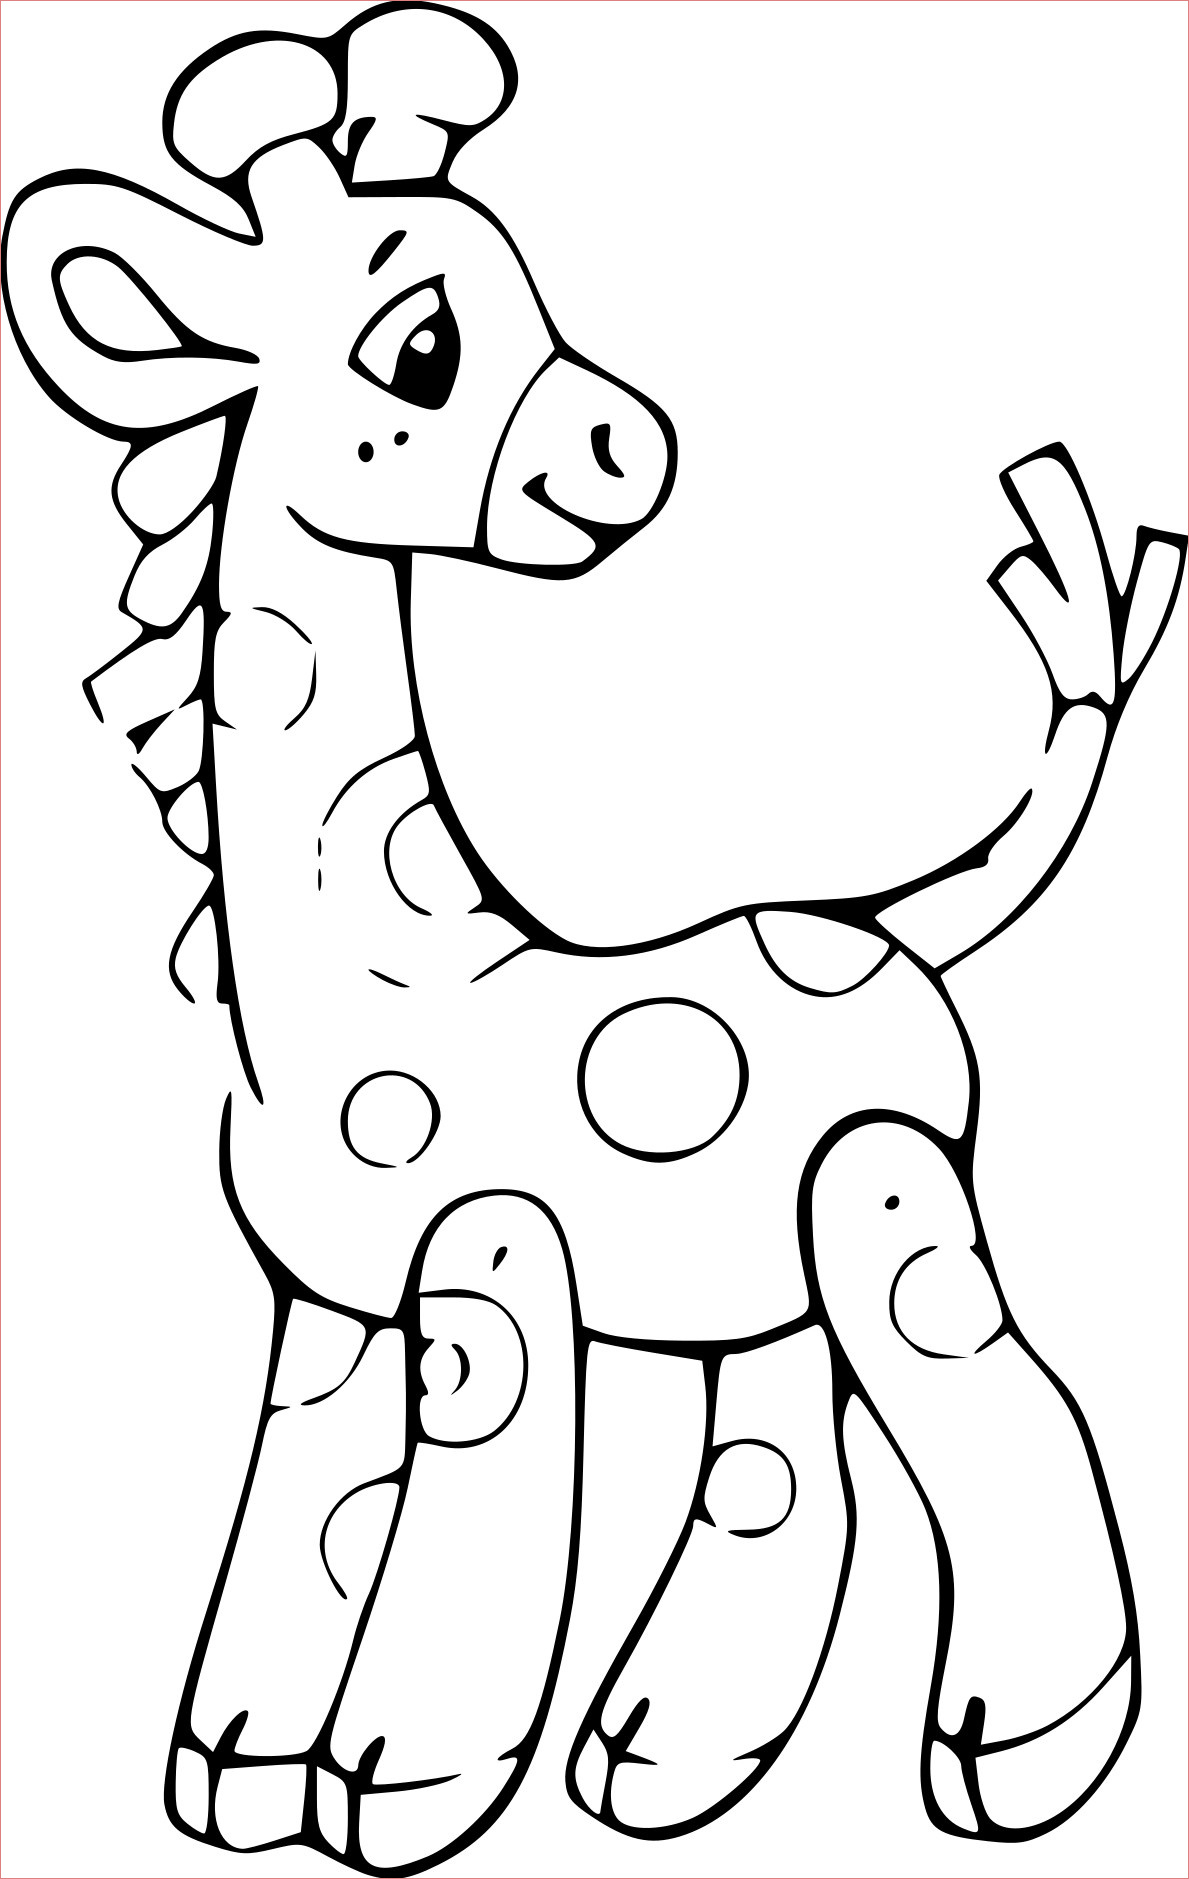 11 Premier Coloriage Girafe Images - Coloriage concernant Dessin Coloriage Animaux 